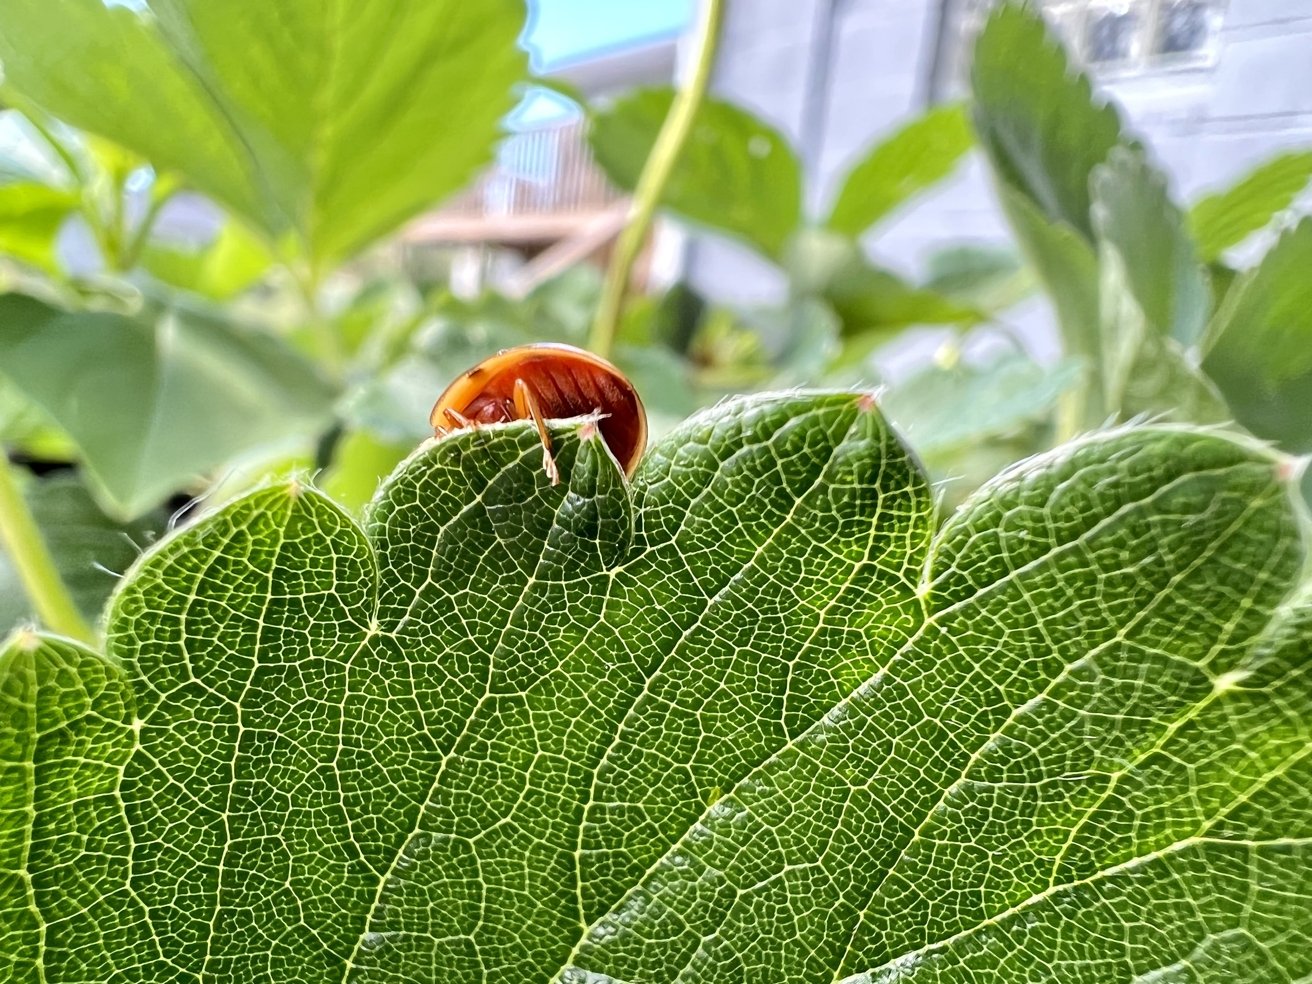 Ladybug on a leaf in macro